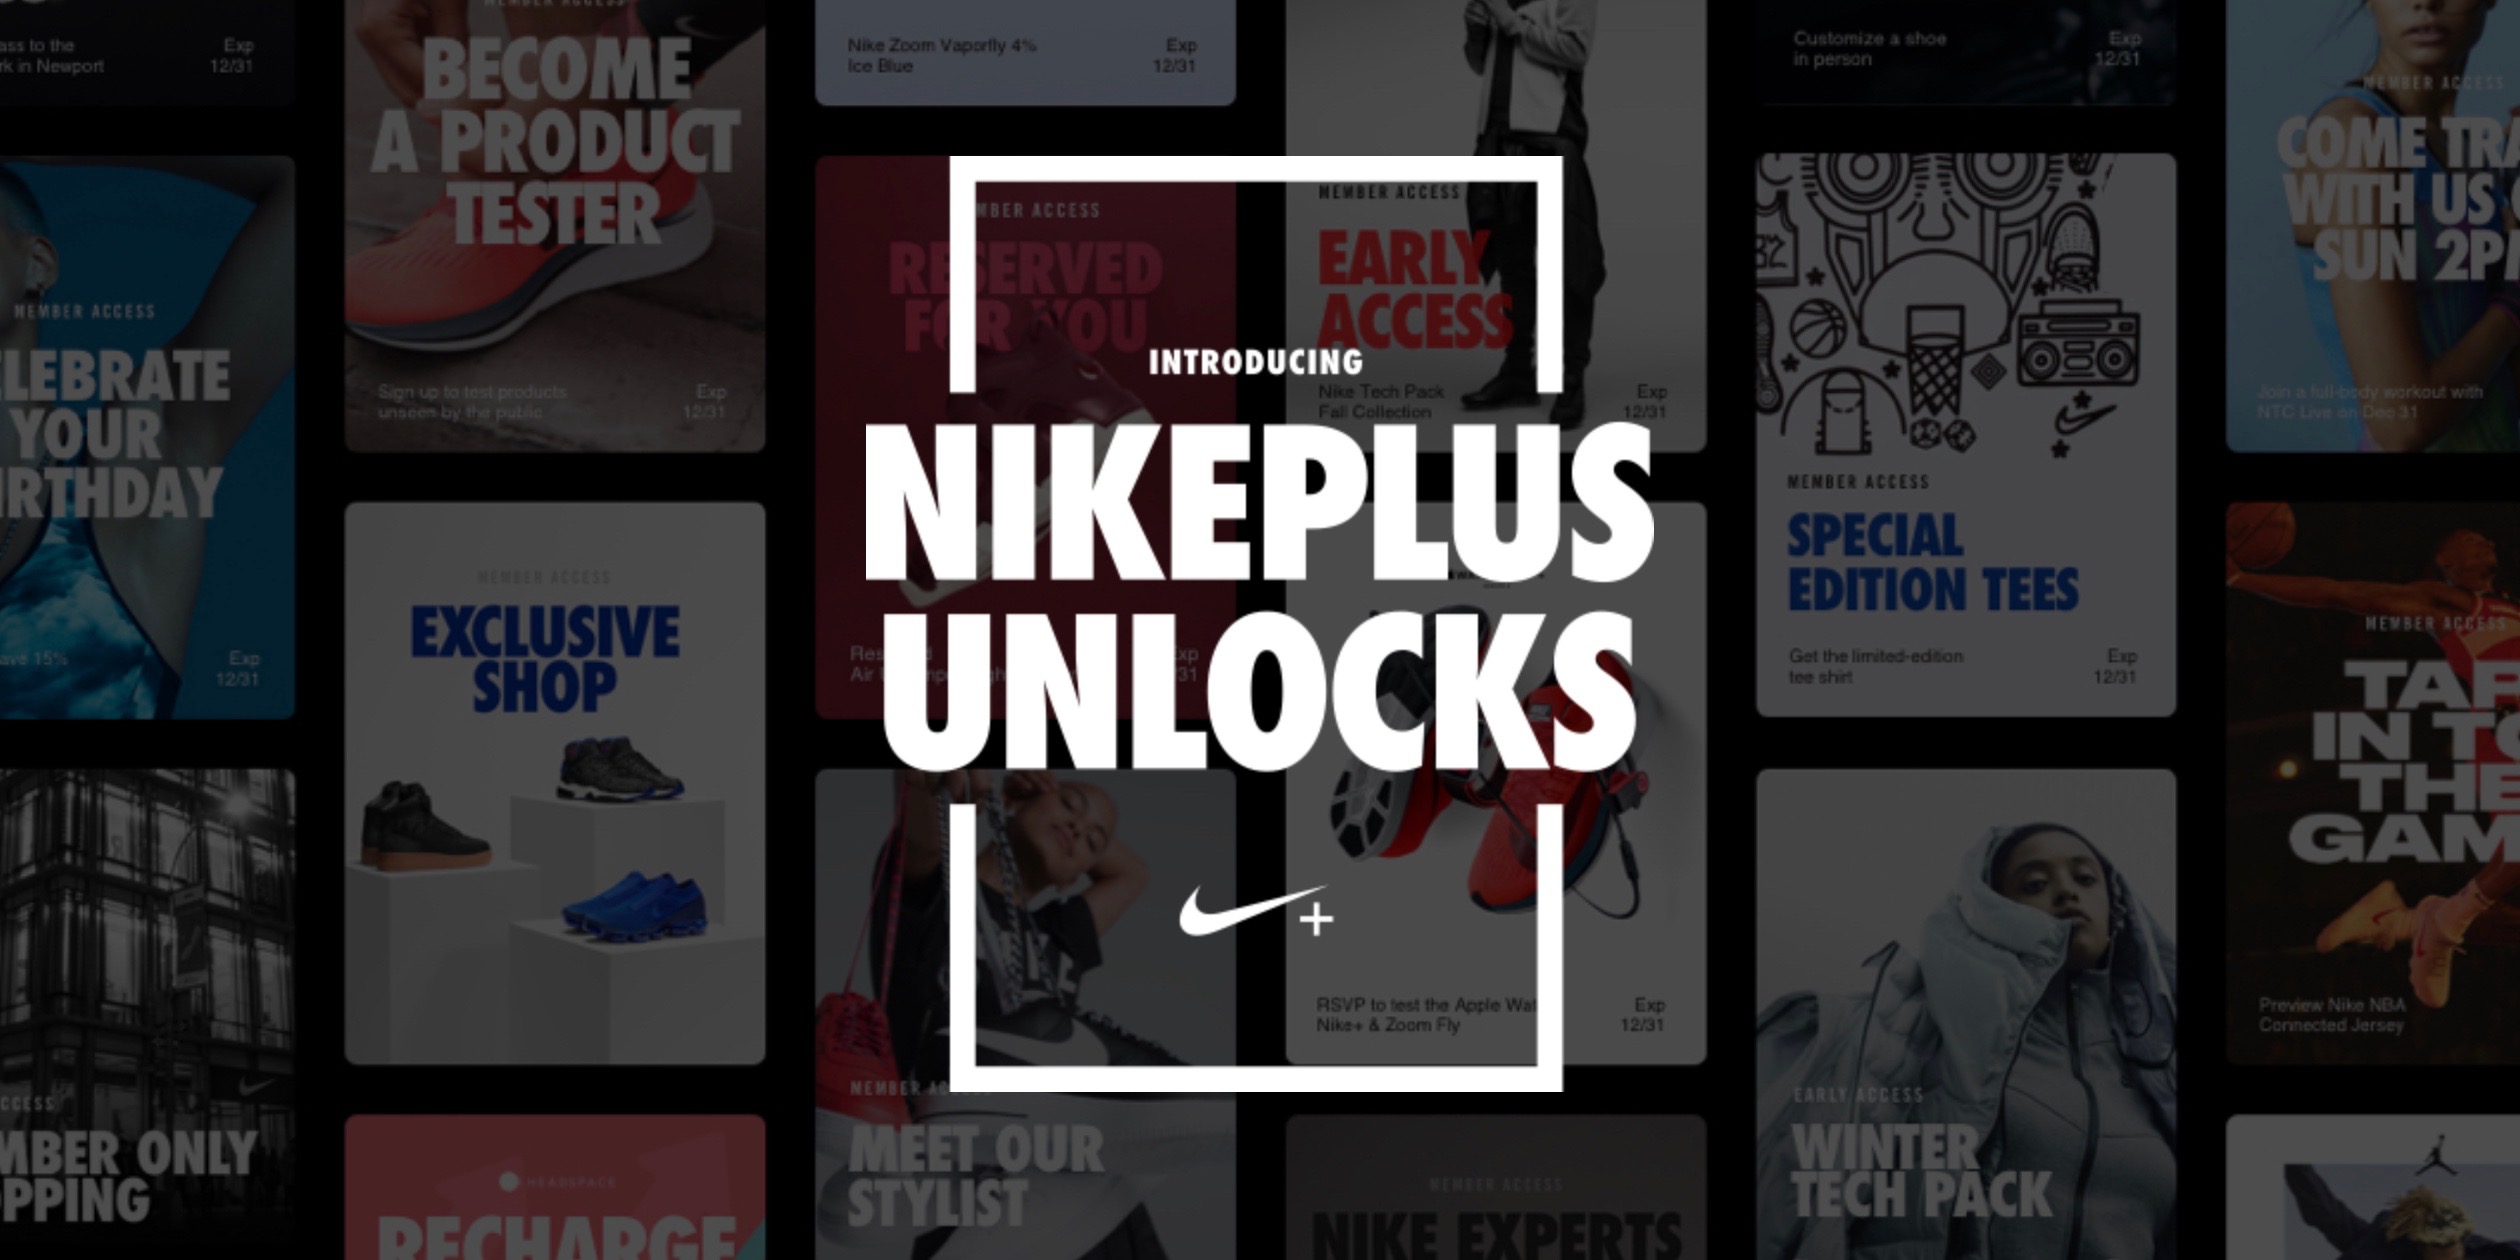 New NikePlus rewards include free Apple 